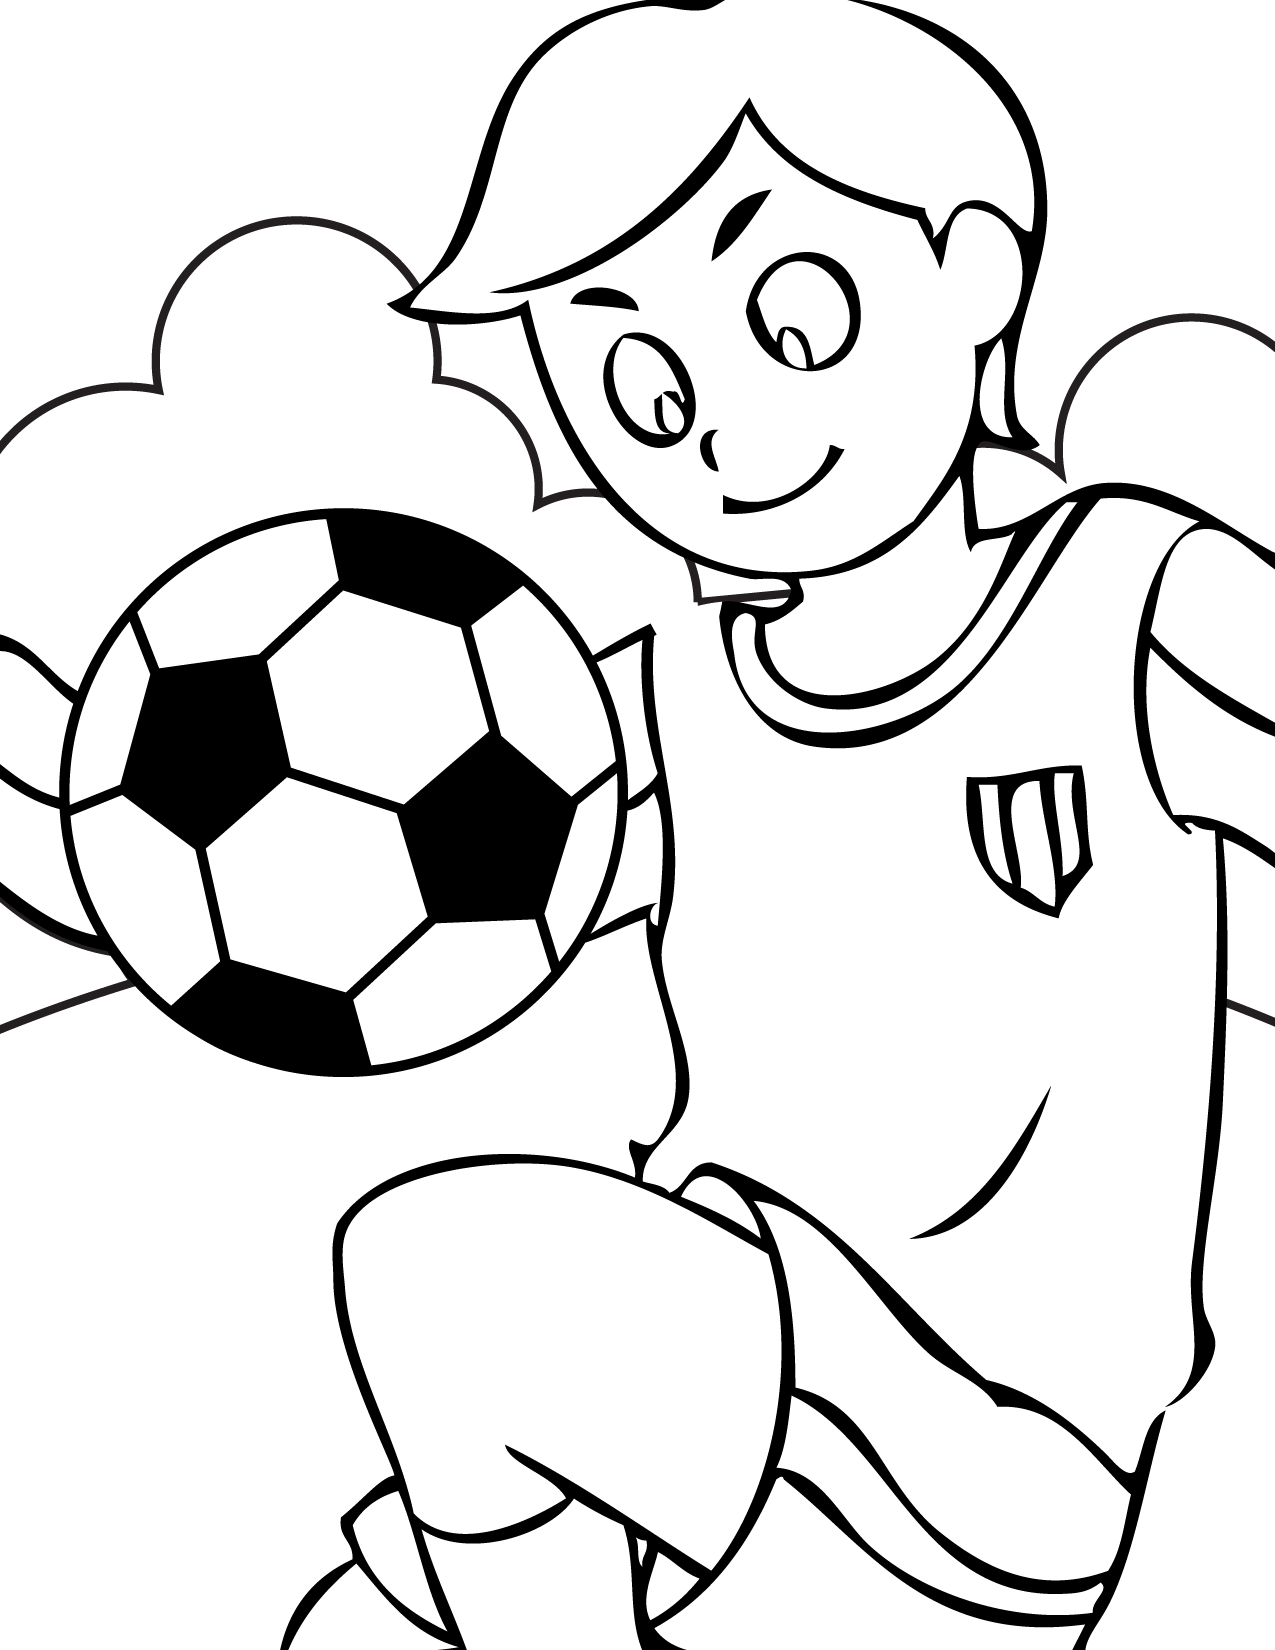 Soccer coloring #2, Download drawings